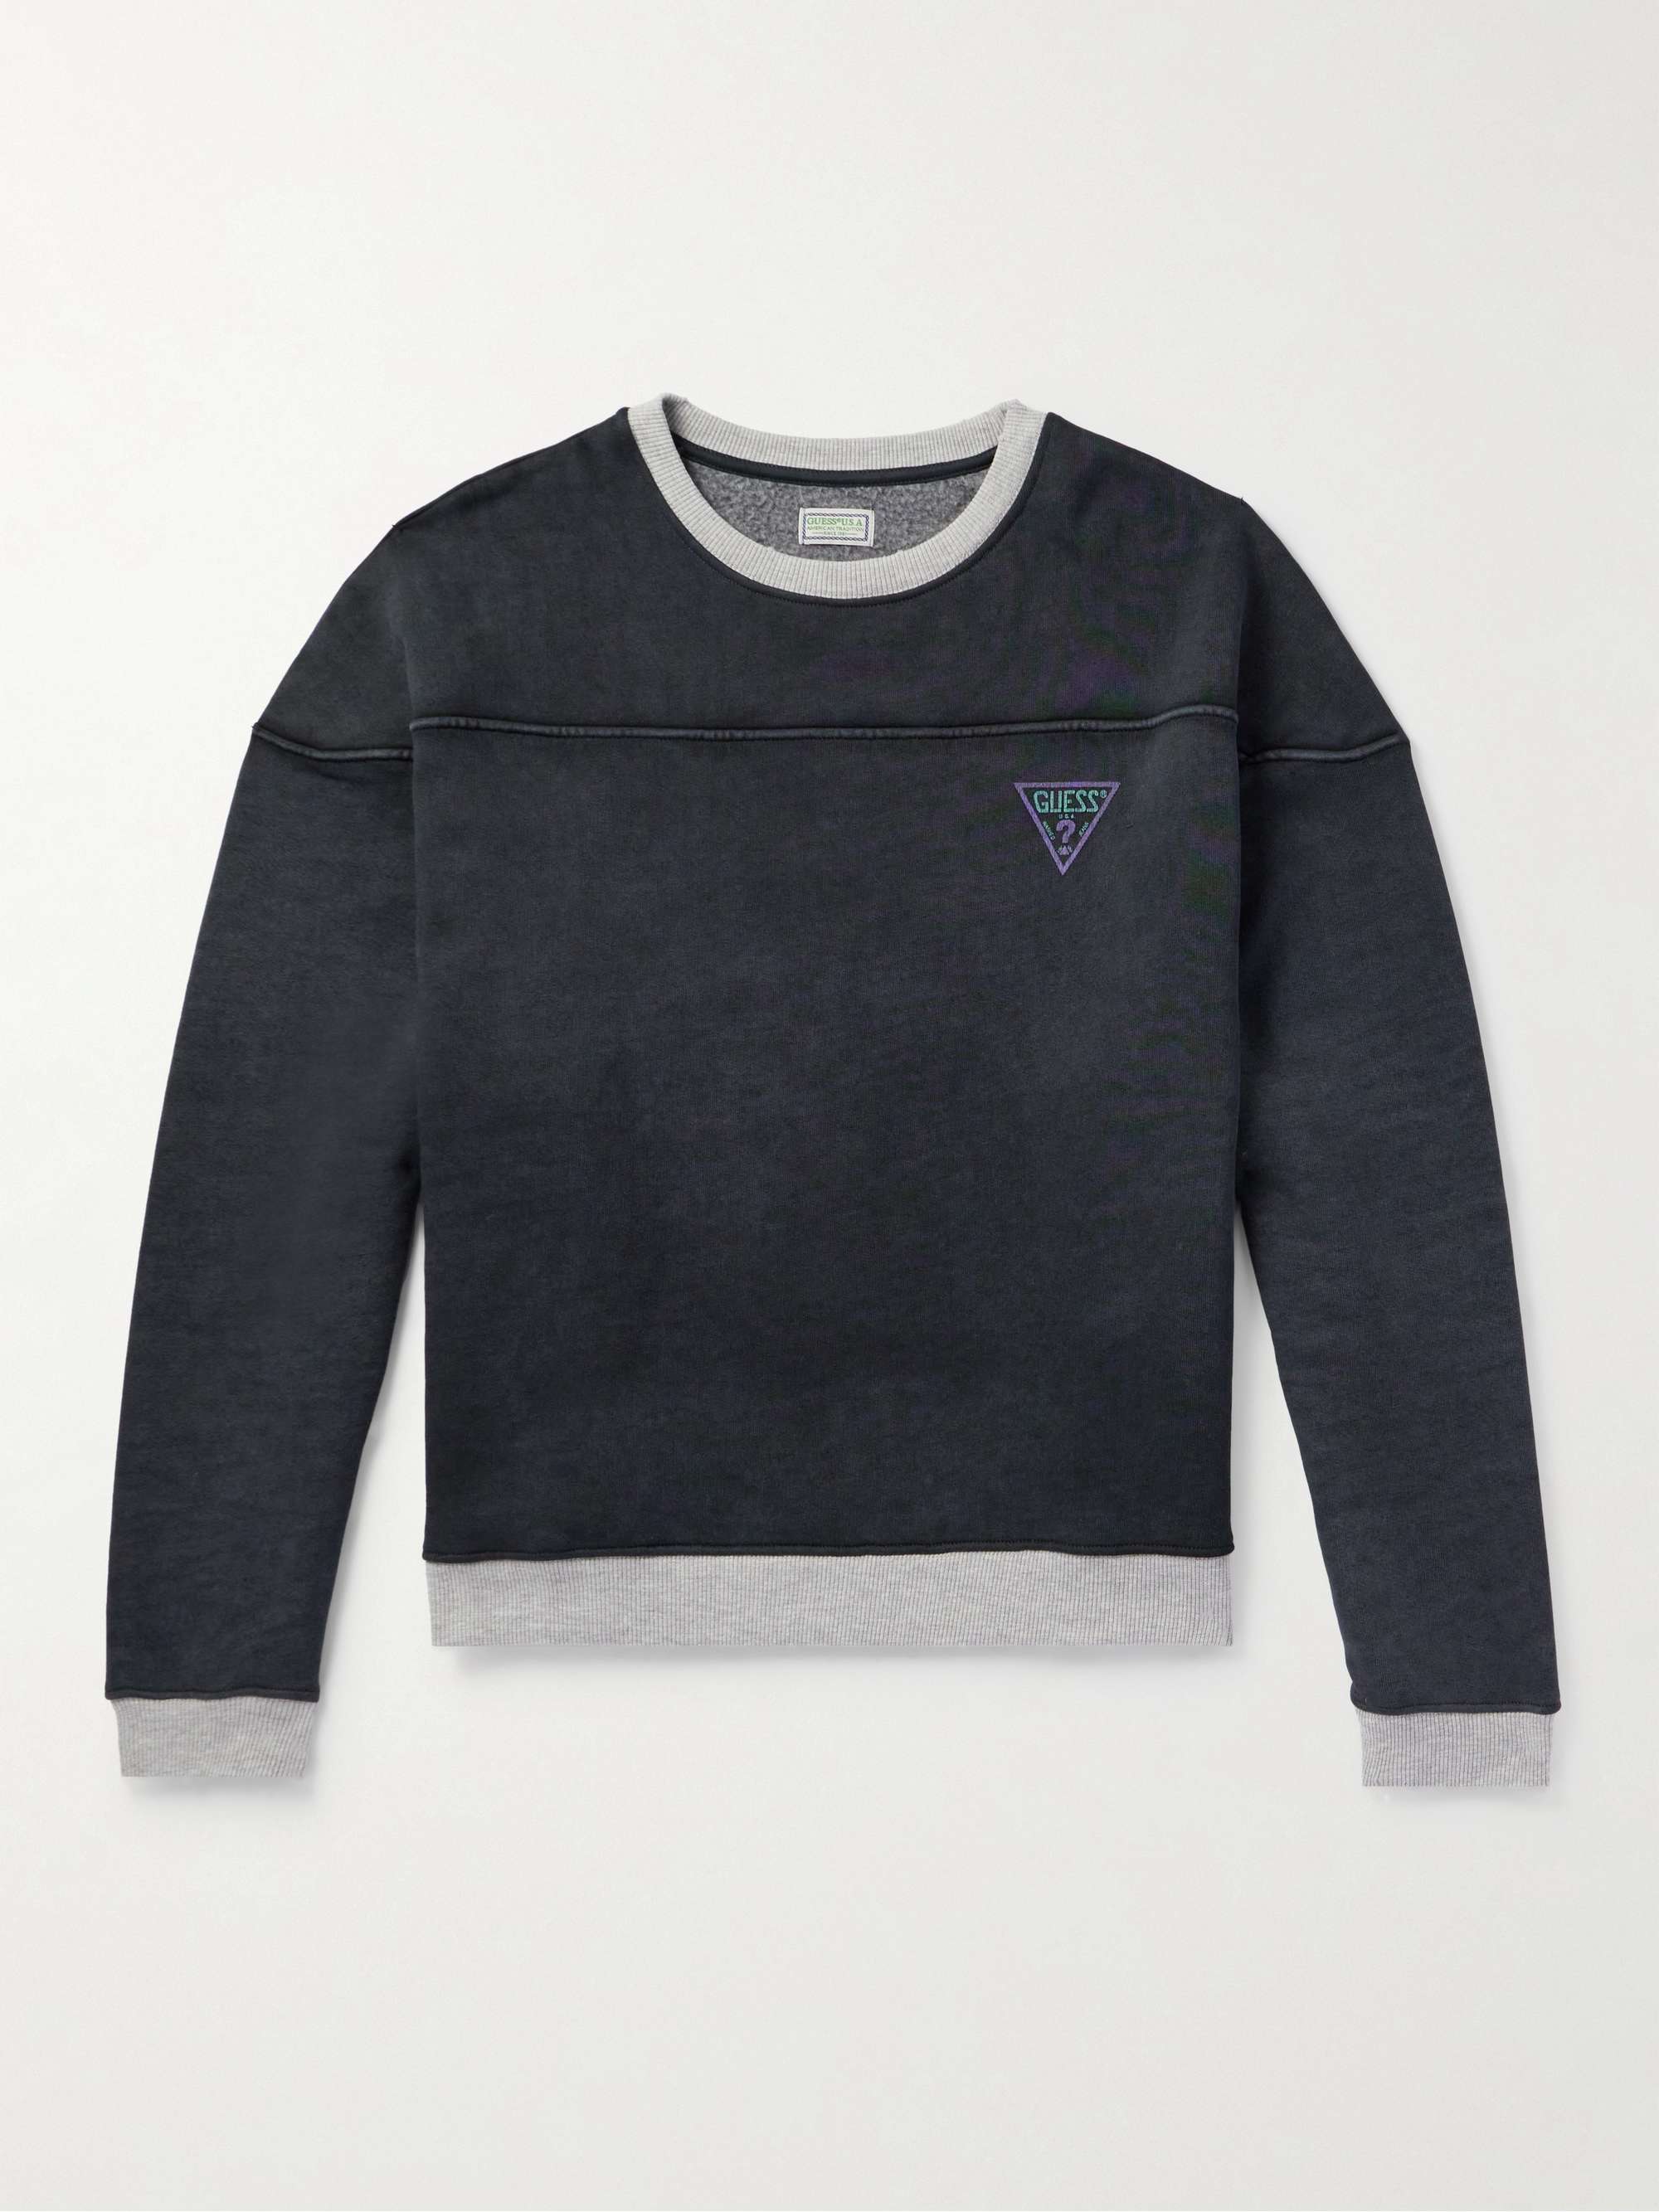 GUESS USA Printed Cotton-Blend Jersey Sweatshirt for Men | MR PORTER